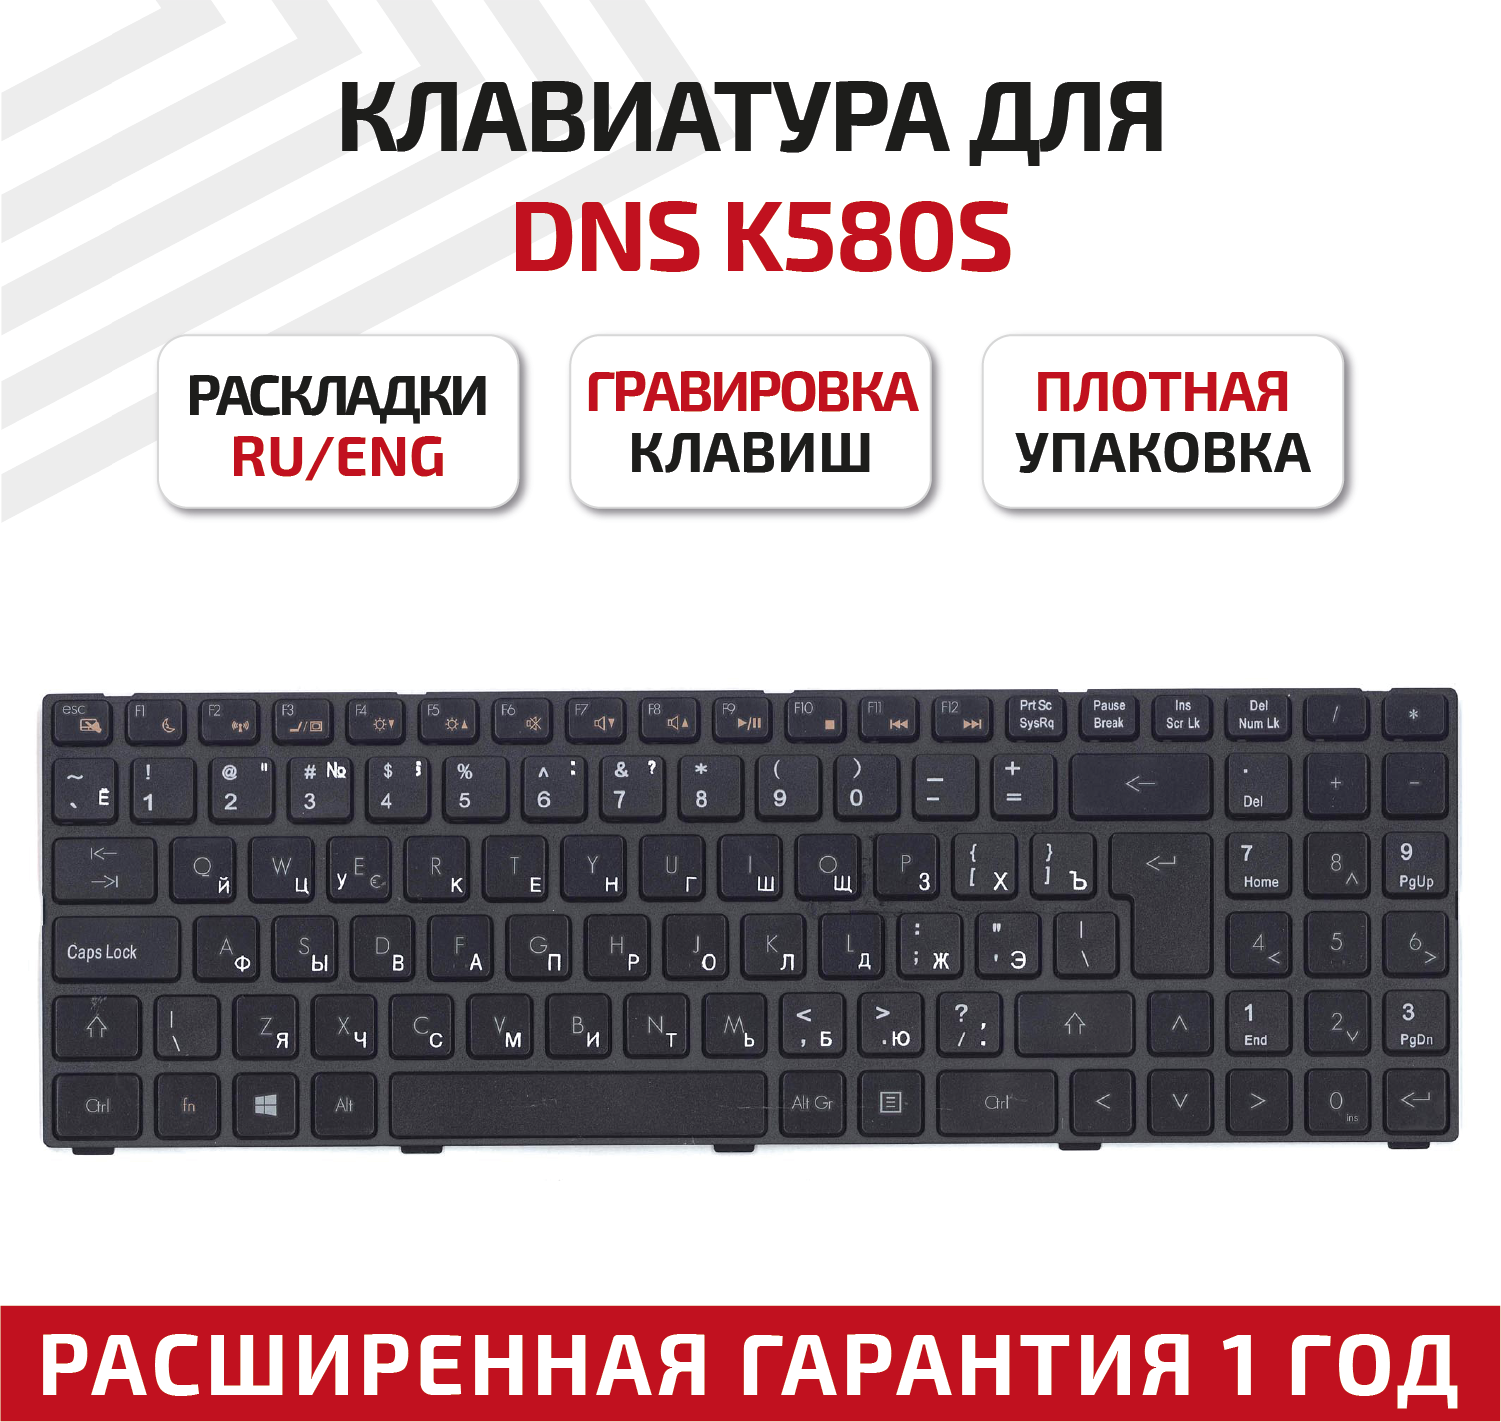 Клавиатура (keyboard) MP-09R63SU-920 для ноутбука DNS K580S DNS 0155959 0158645 Quanta TWH K580S черная с рамкой